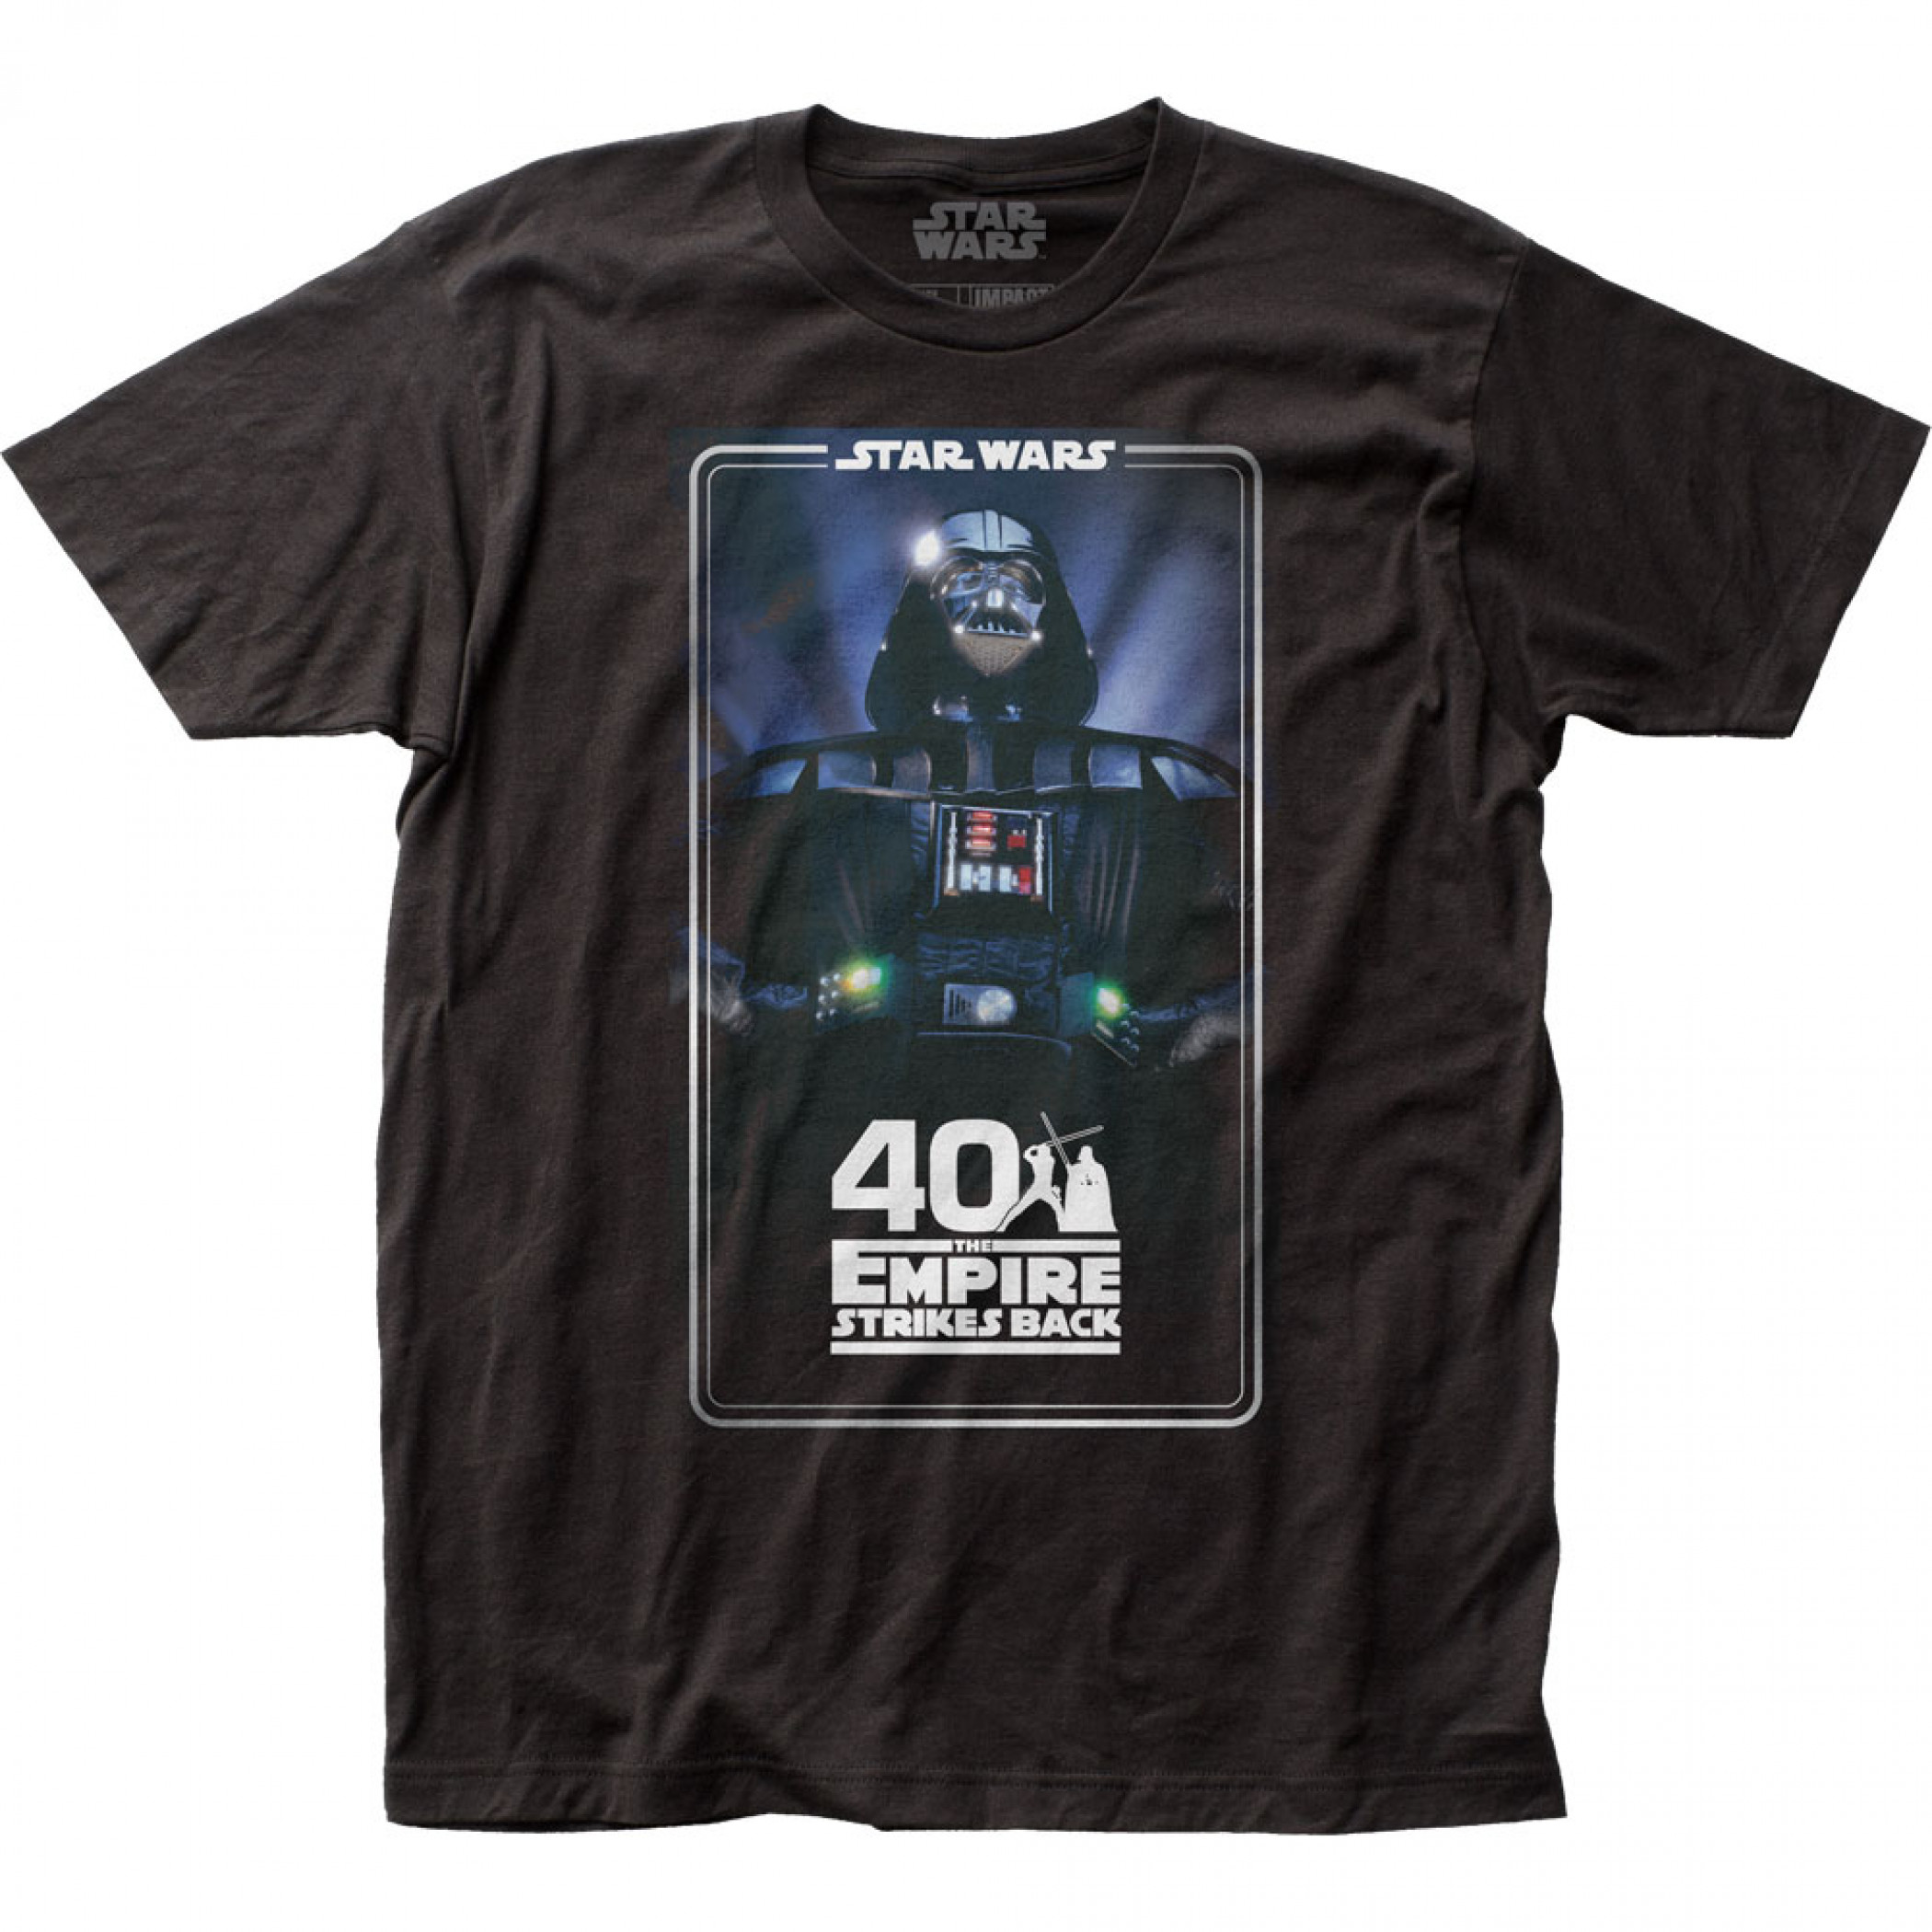 Star Wars 40th Anniversary Empire Strikes Back Poster T-Shirt